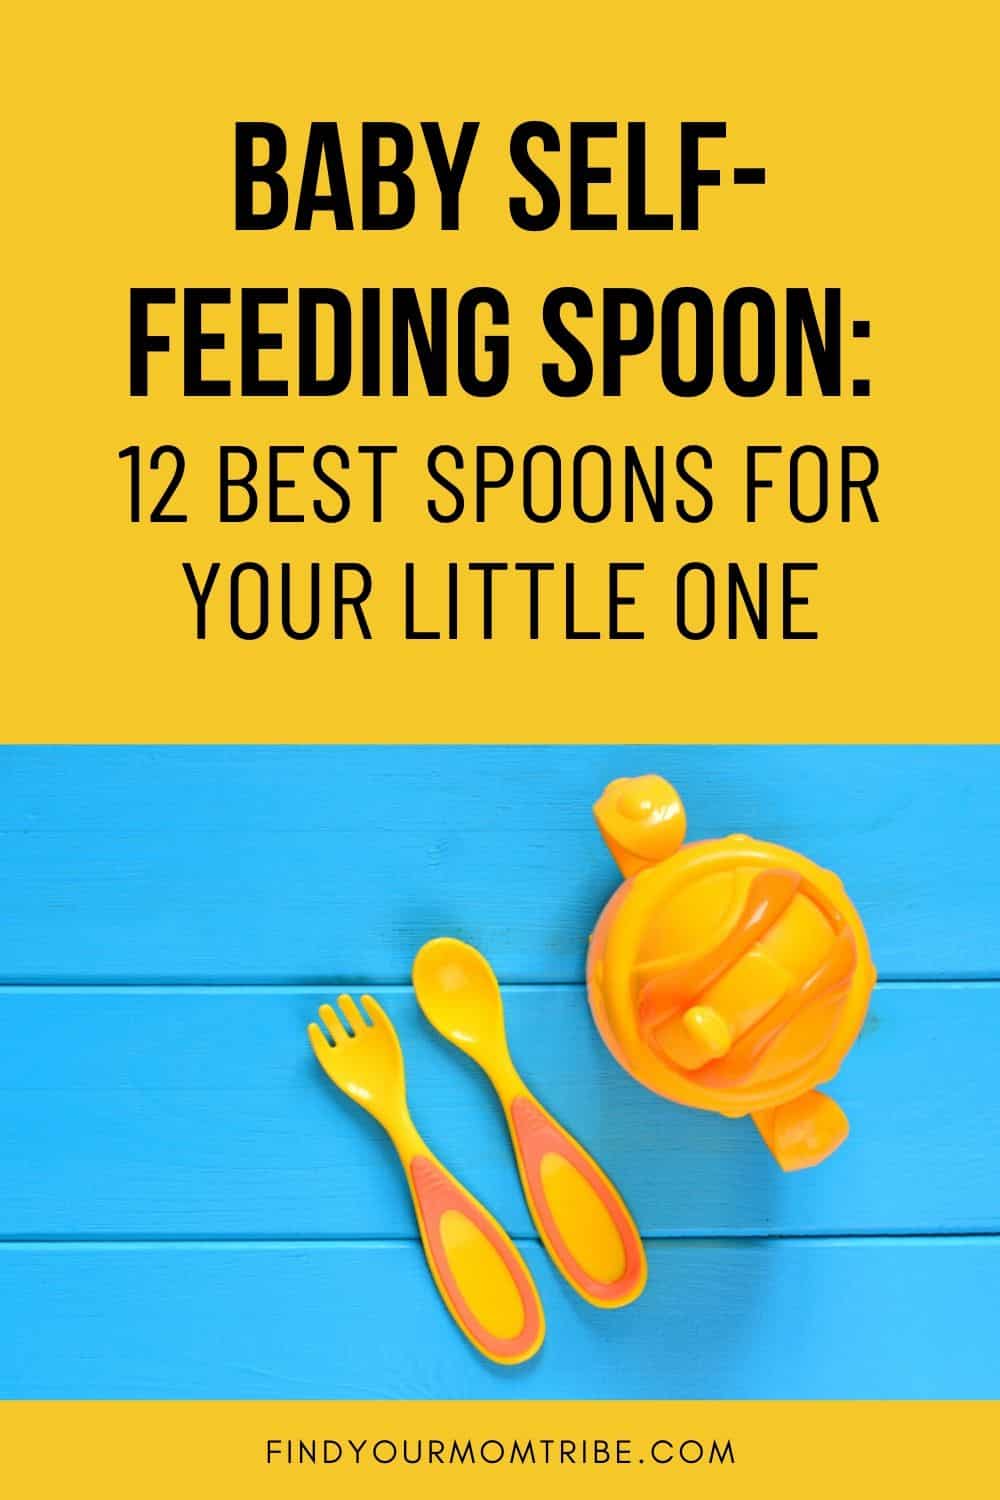 Baby Self-Feeding Spoon Pinterest